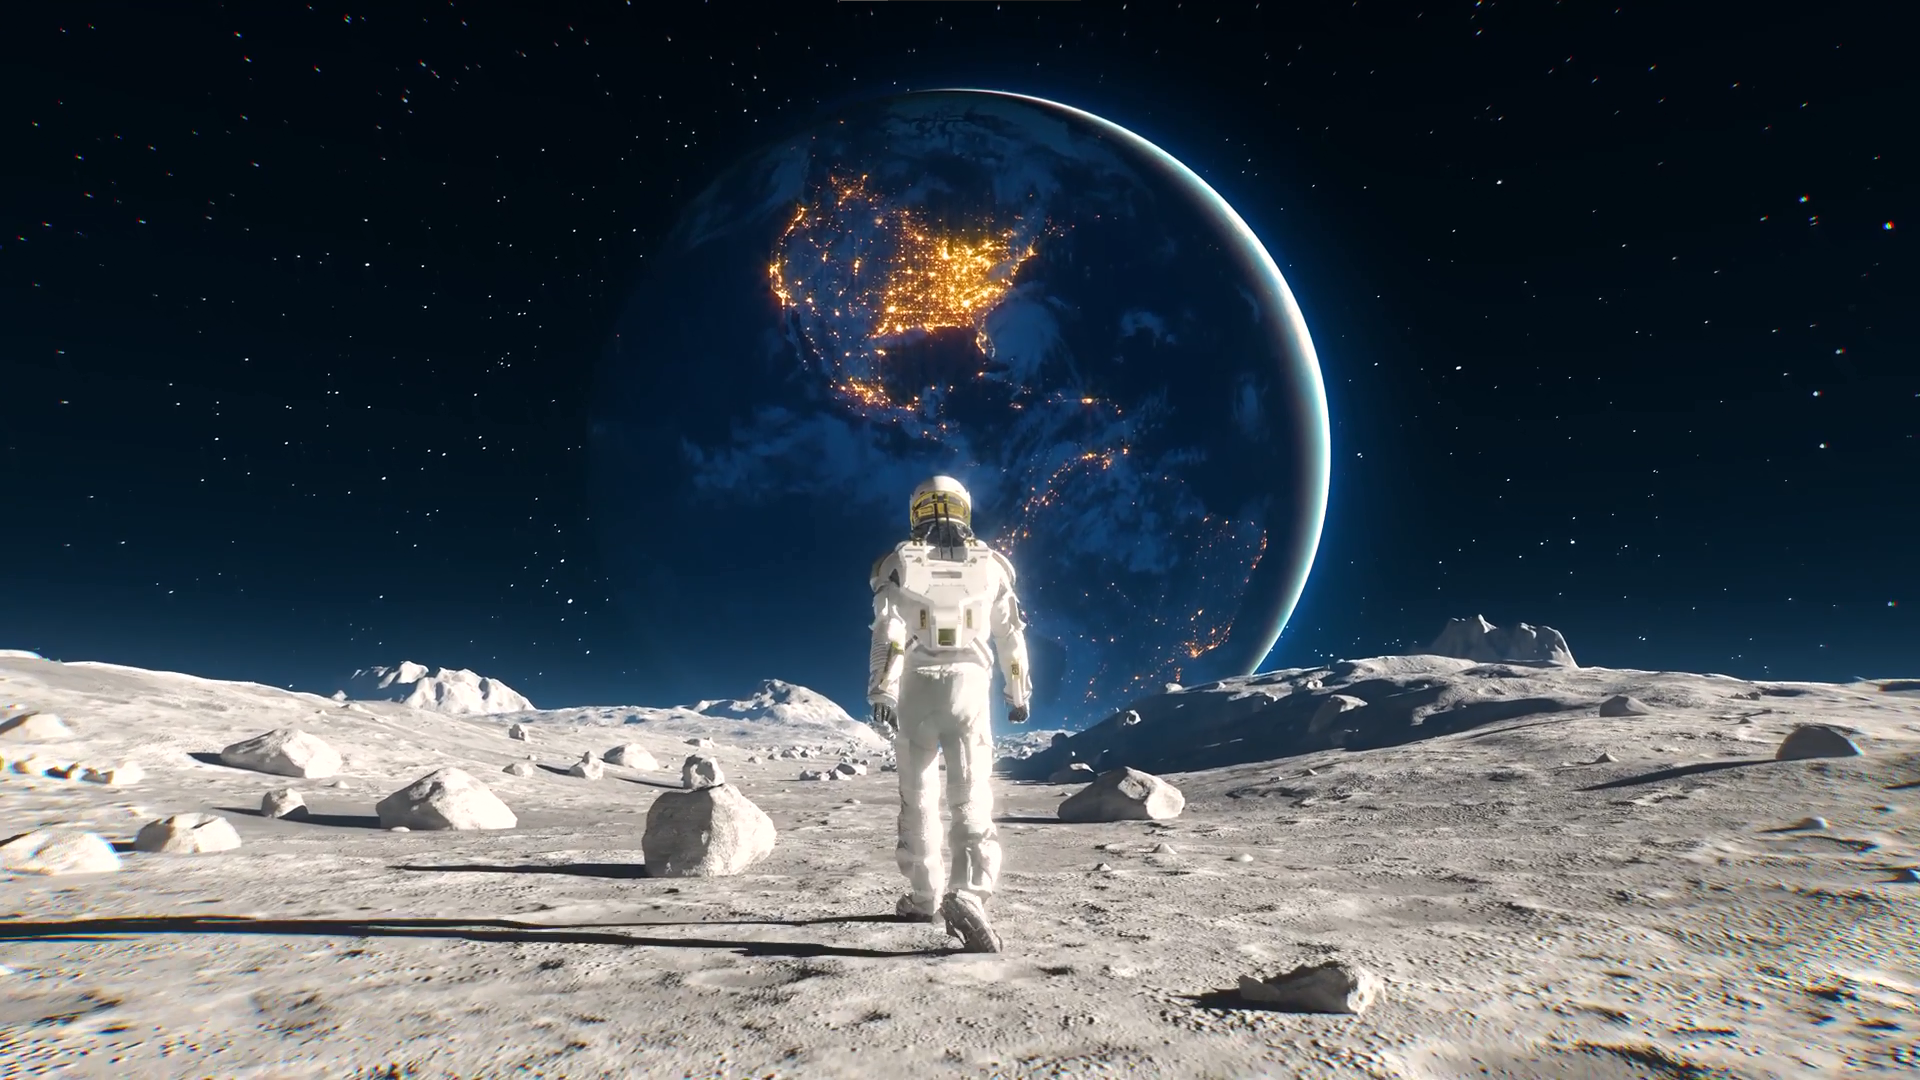 General 1920x1080 Moon space Earth astronaut stars visualdon walking spacesuit Lunar surface rocks